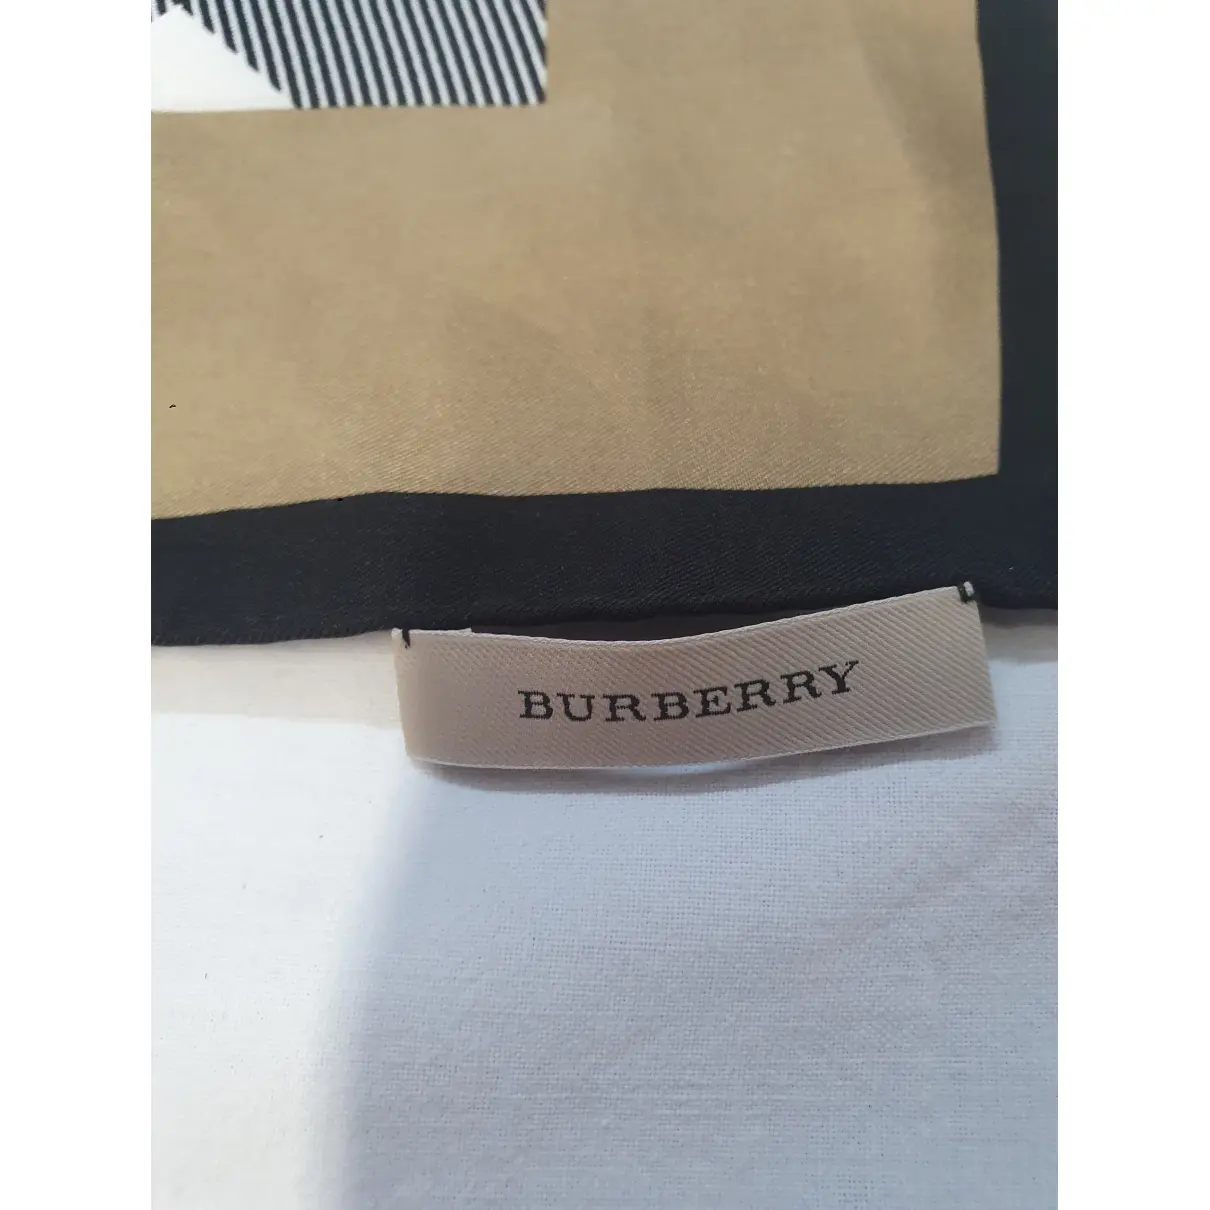 Buy Burberry Silk neckerchief online - Vintage